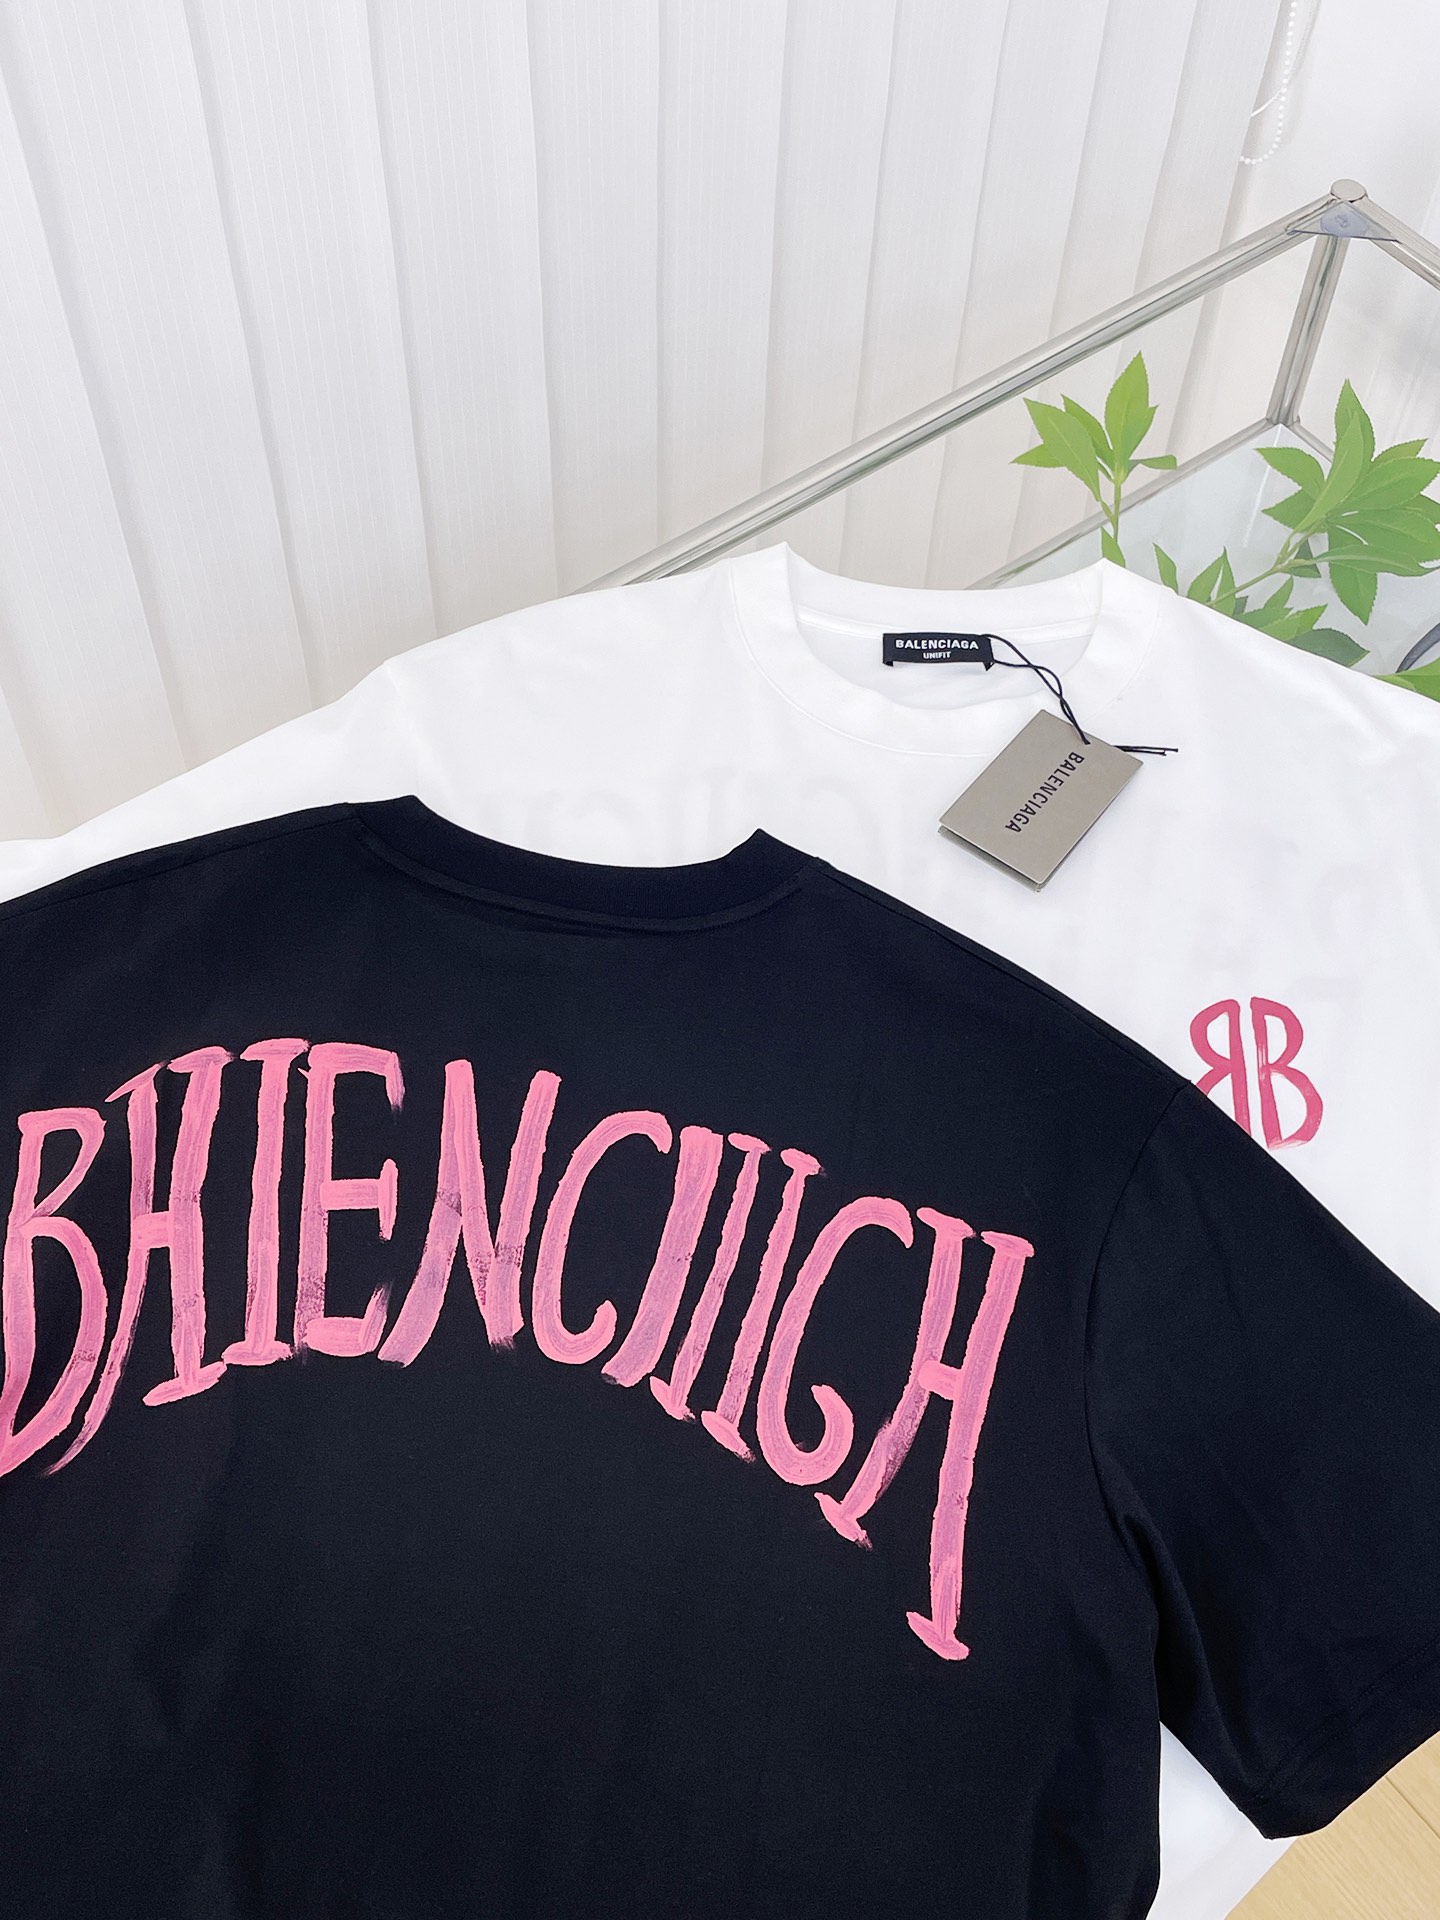 Balenciaga Clothing T-Shirt Printing Unisex Cotton Spring/Summer Collection Fashion Short Sleeve